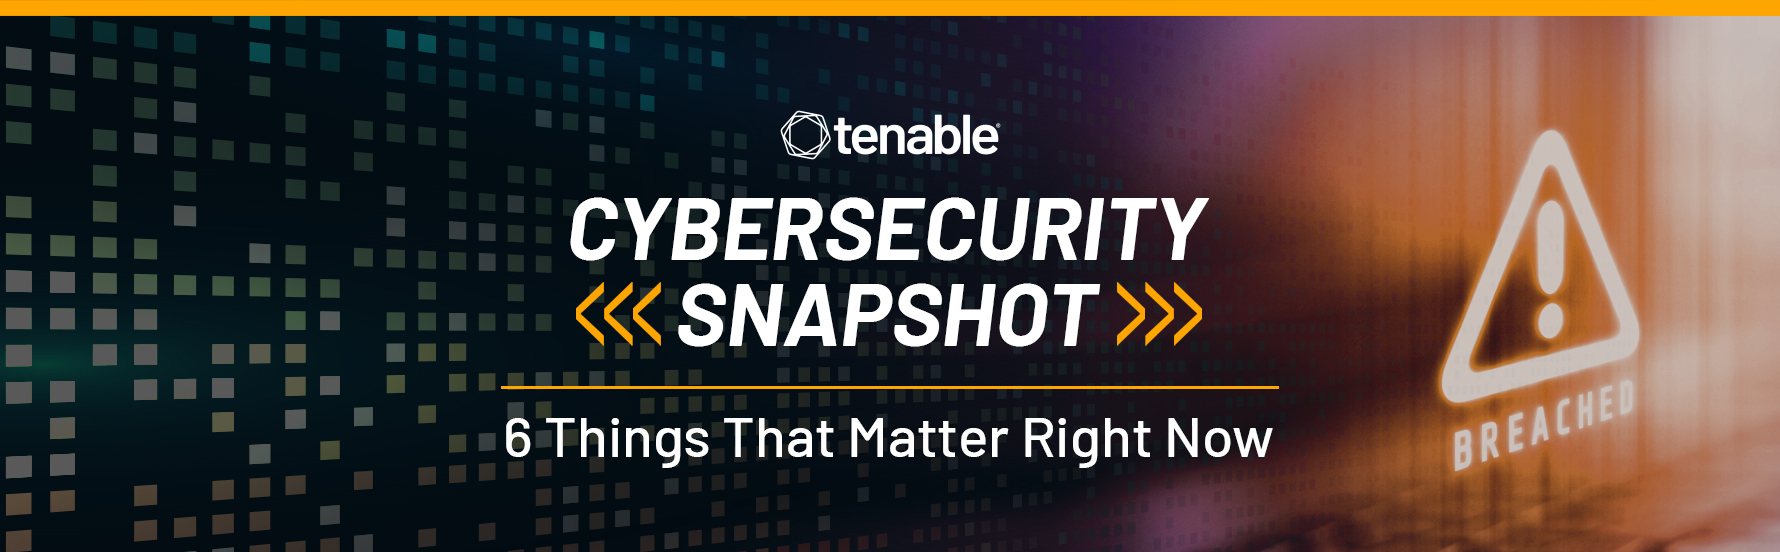 Cybersecurity Snapshot #11 -- main image